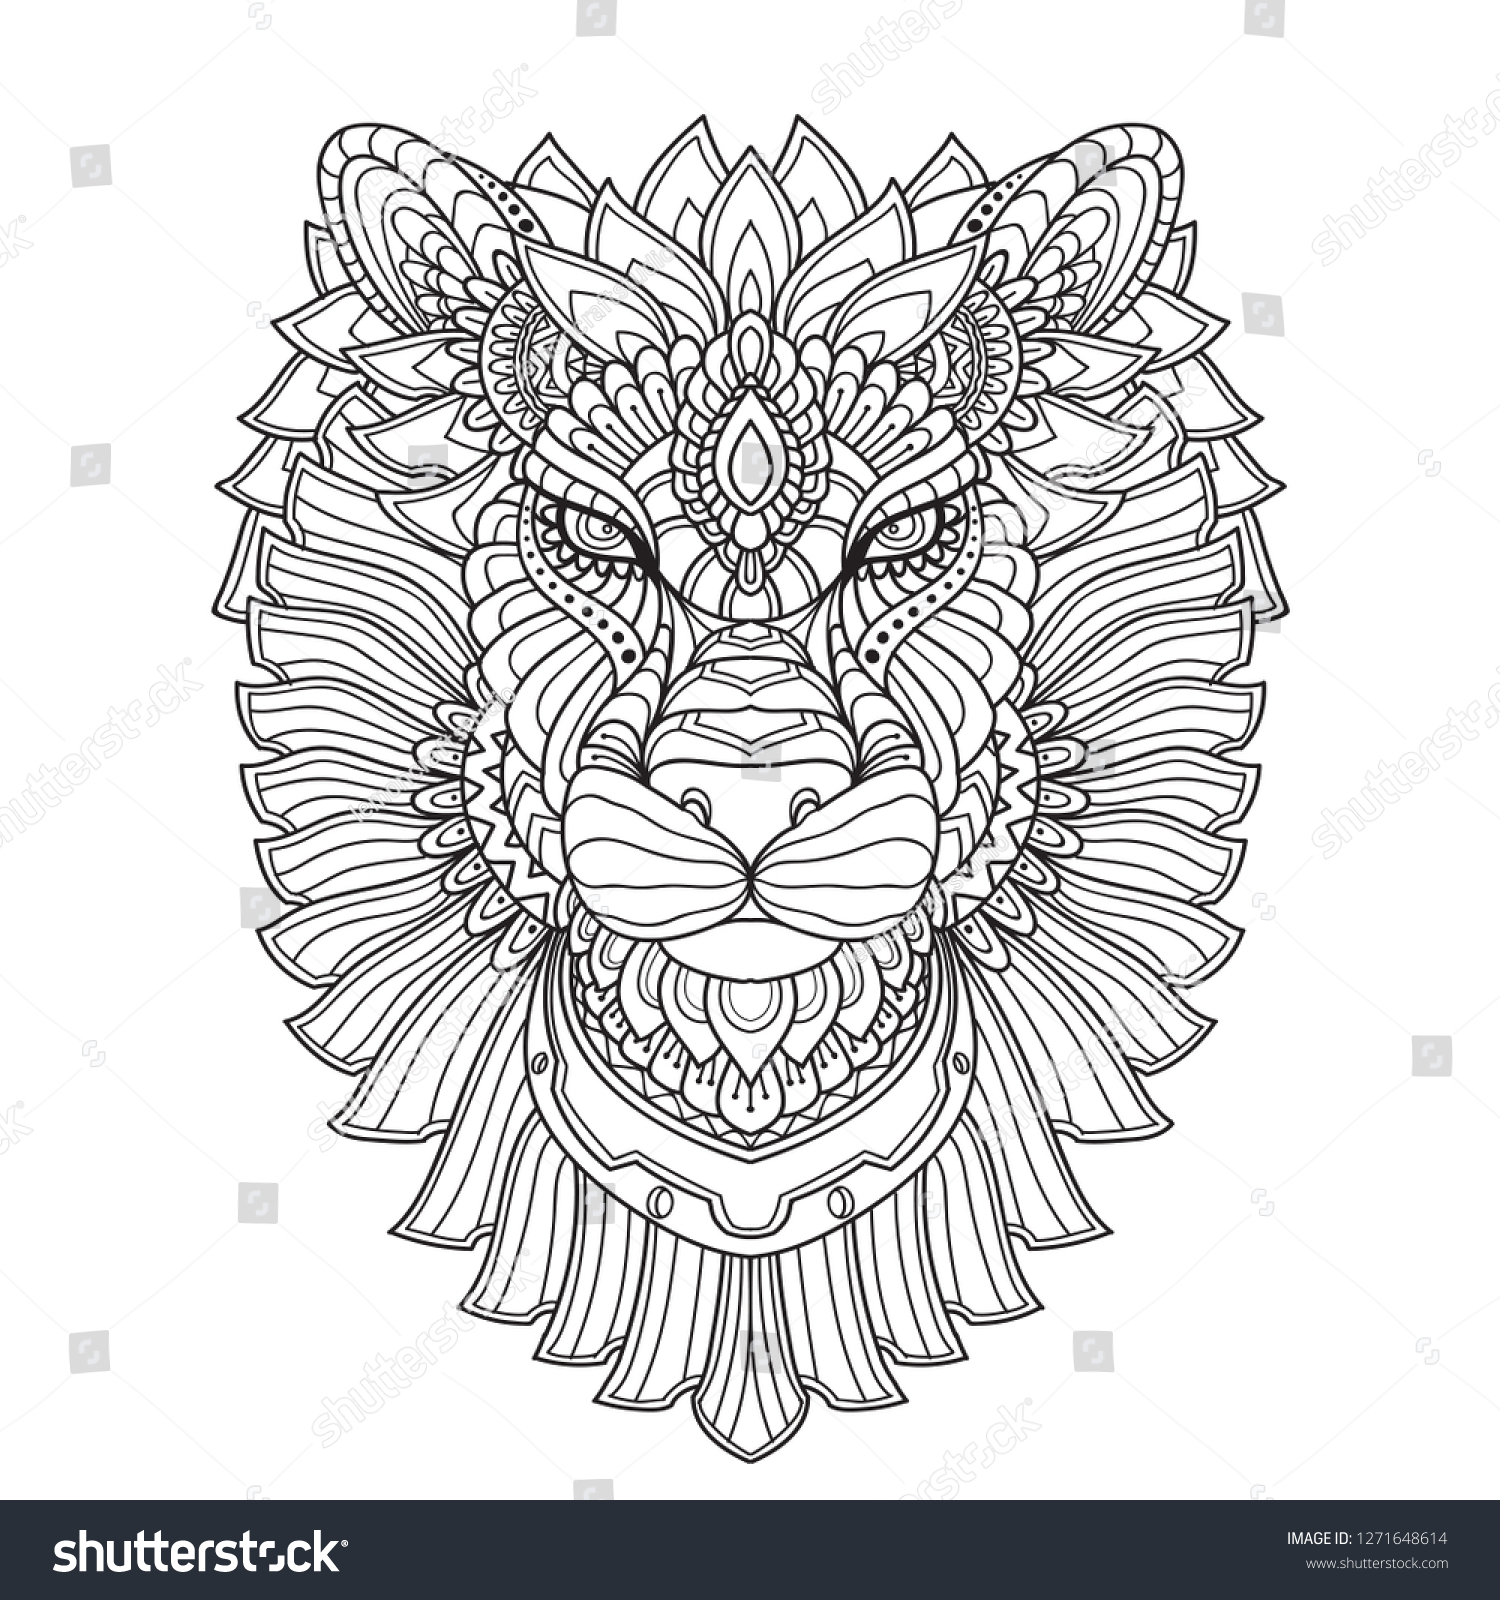 Zenta Lion 手描きの落書き風ゼンタングルライオンイラスト 彩色本用の装飾的な装飾的なベクターライオンの頭描き ベクター画像 のベクター画像素材 ロイヤリティフリー